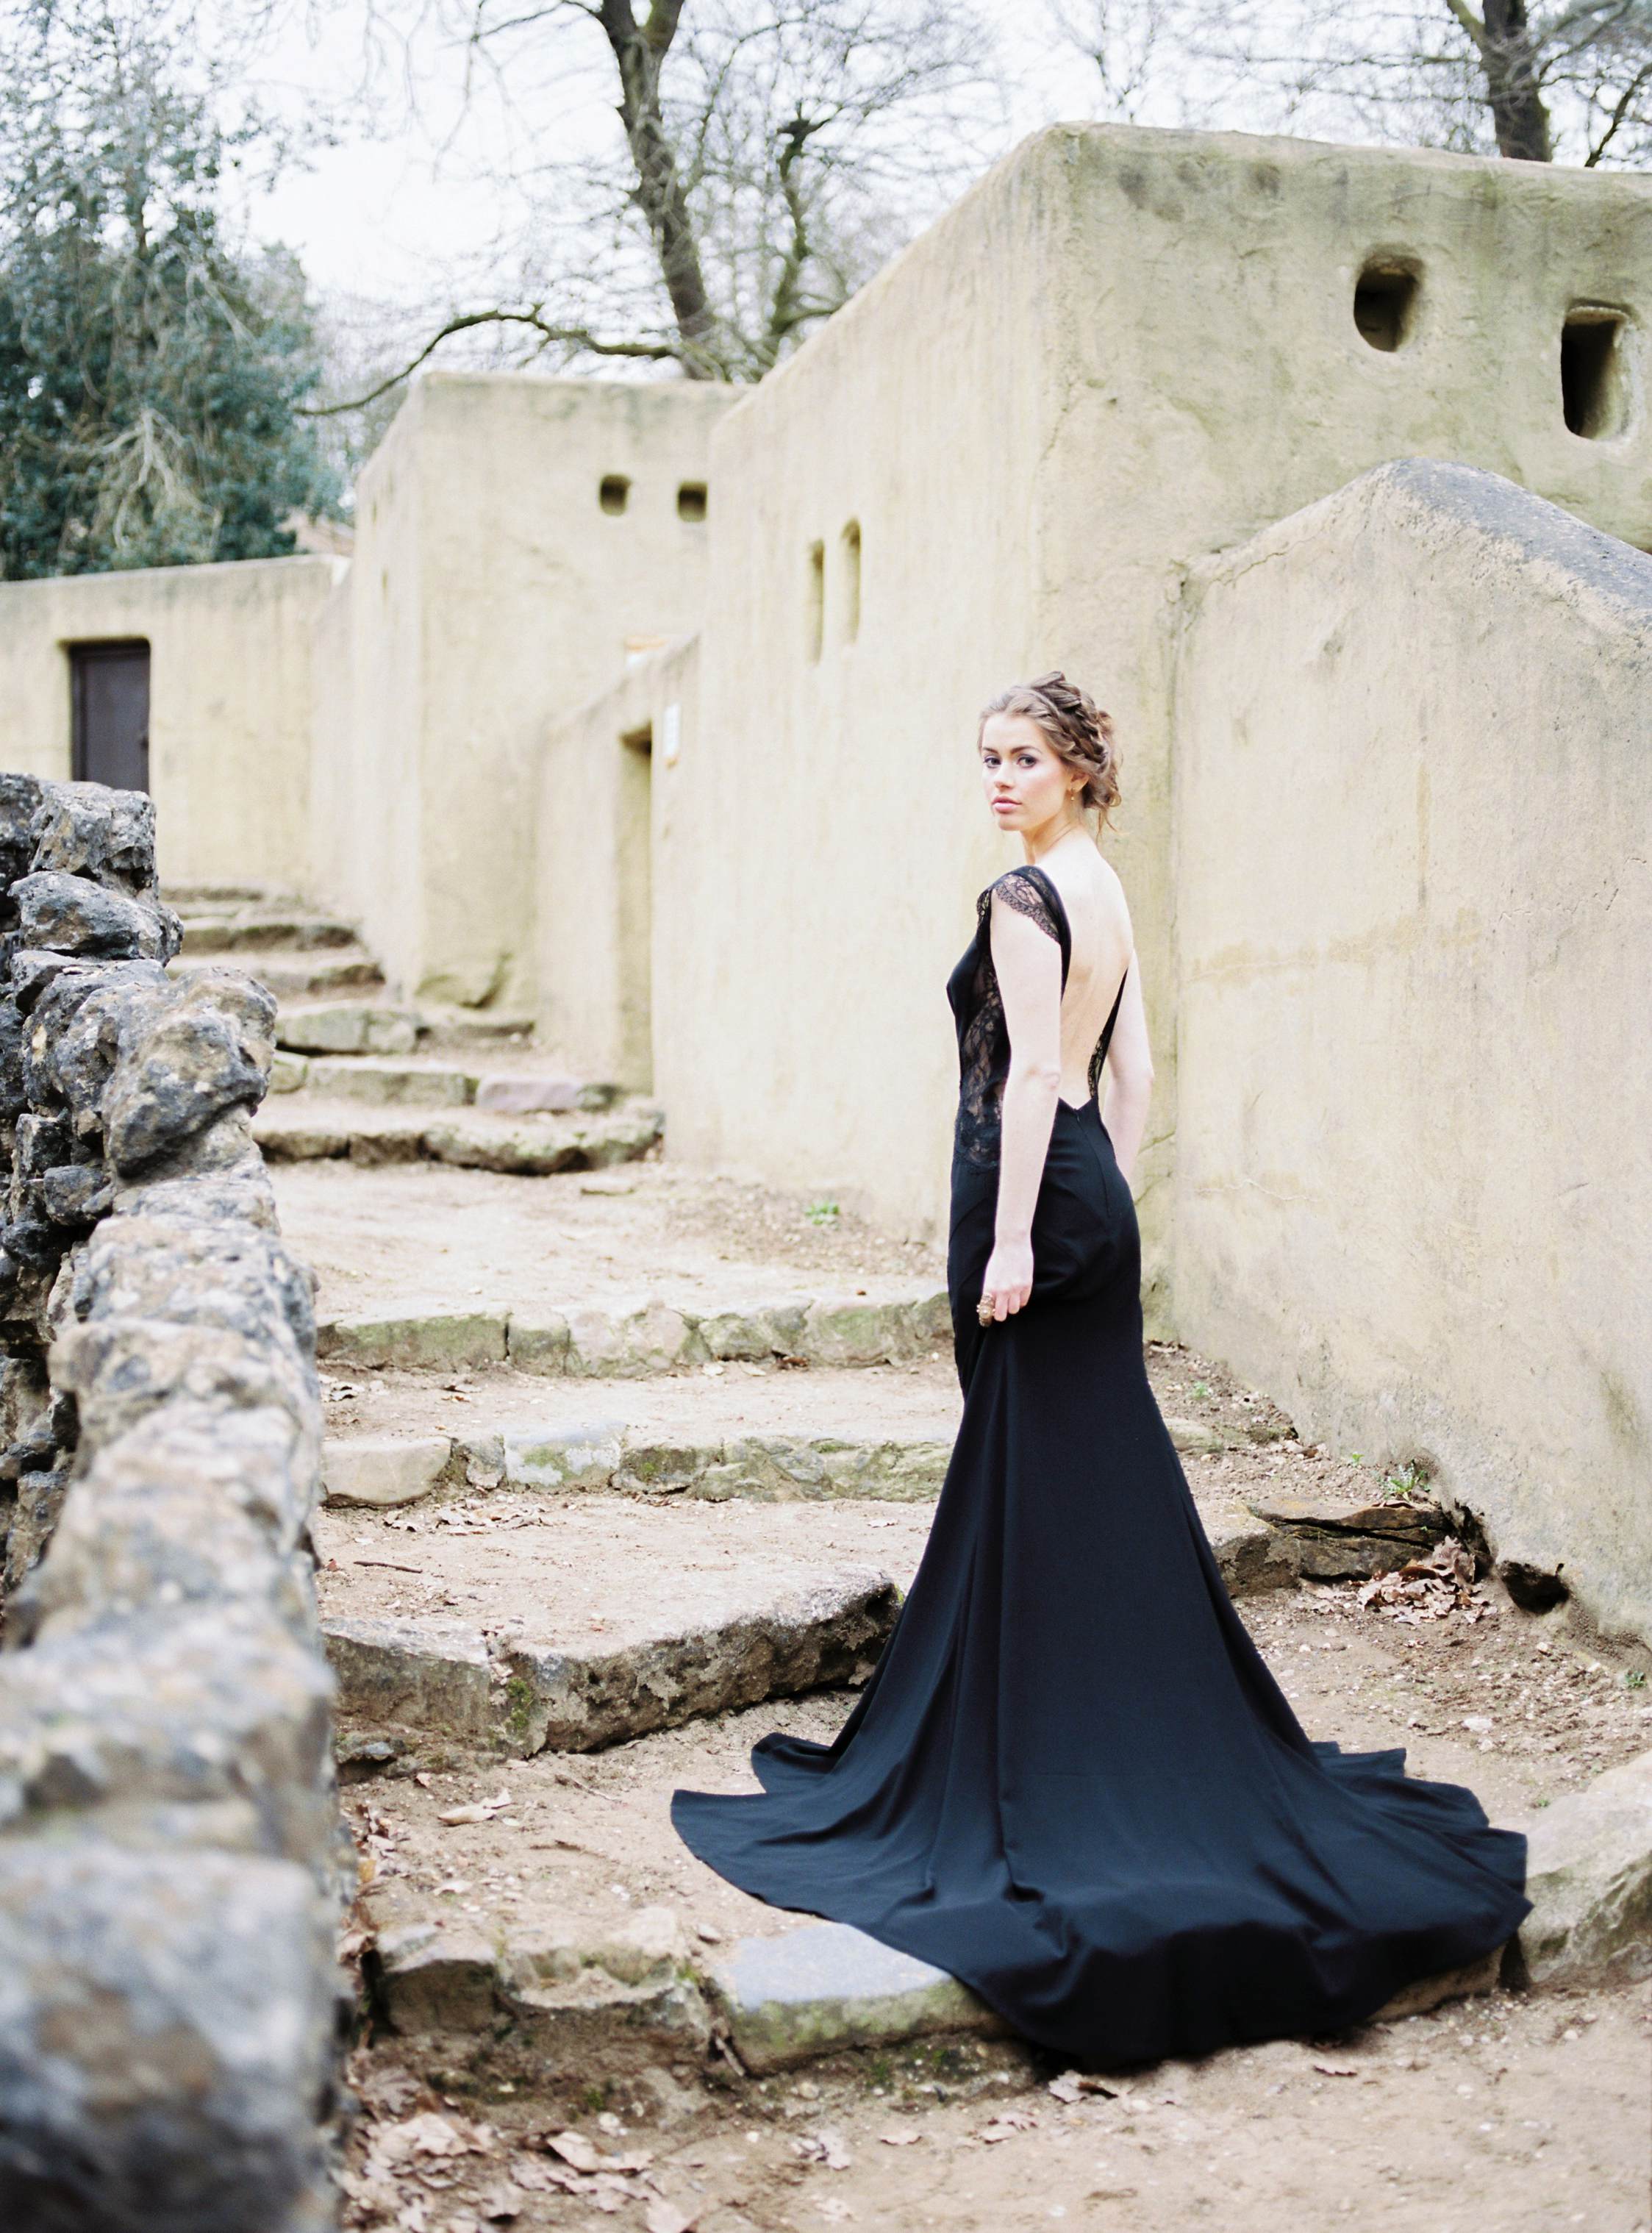 Wedding photographer moroccan inspired styled shoot - Black wedding dress